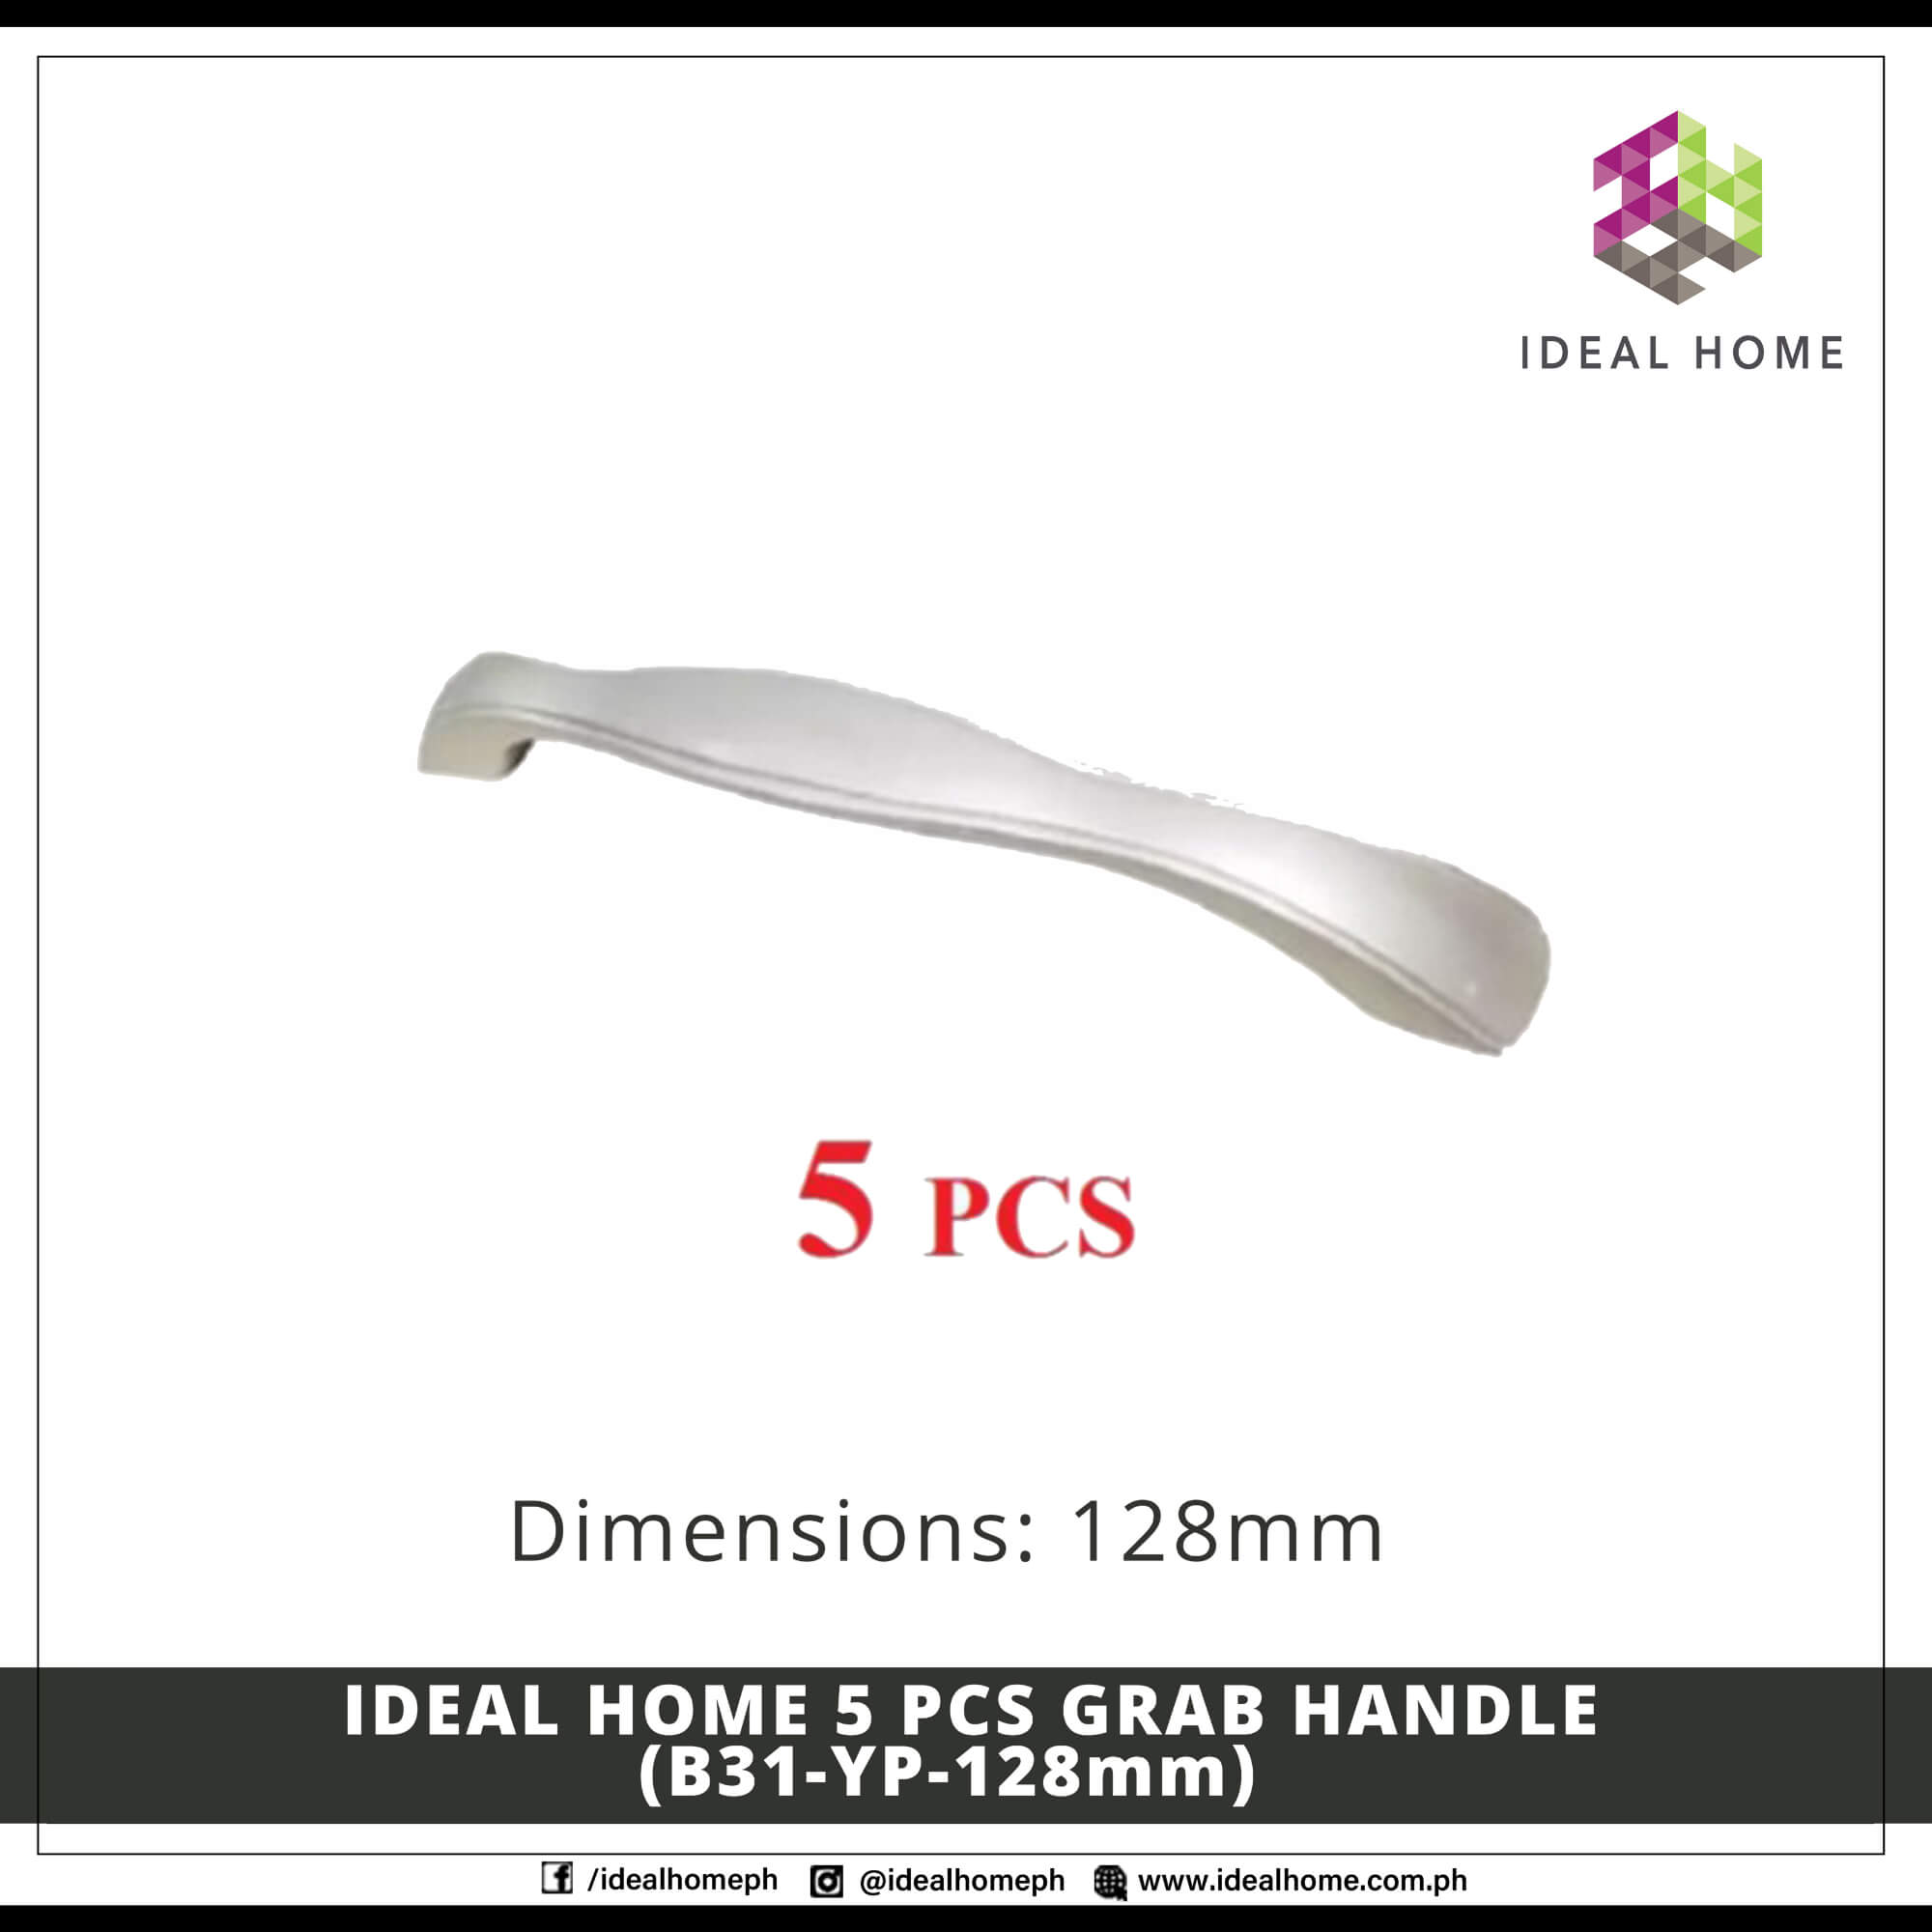 Ideal Home 5 PCS Grab Handle (B31-YP-128mm)